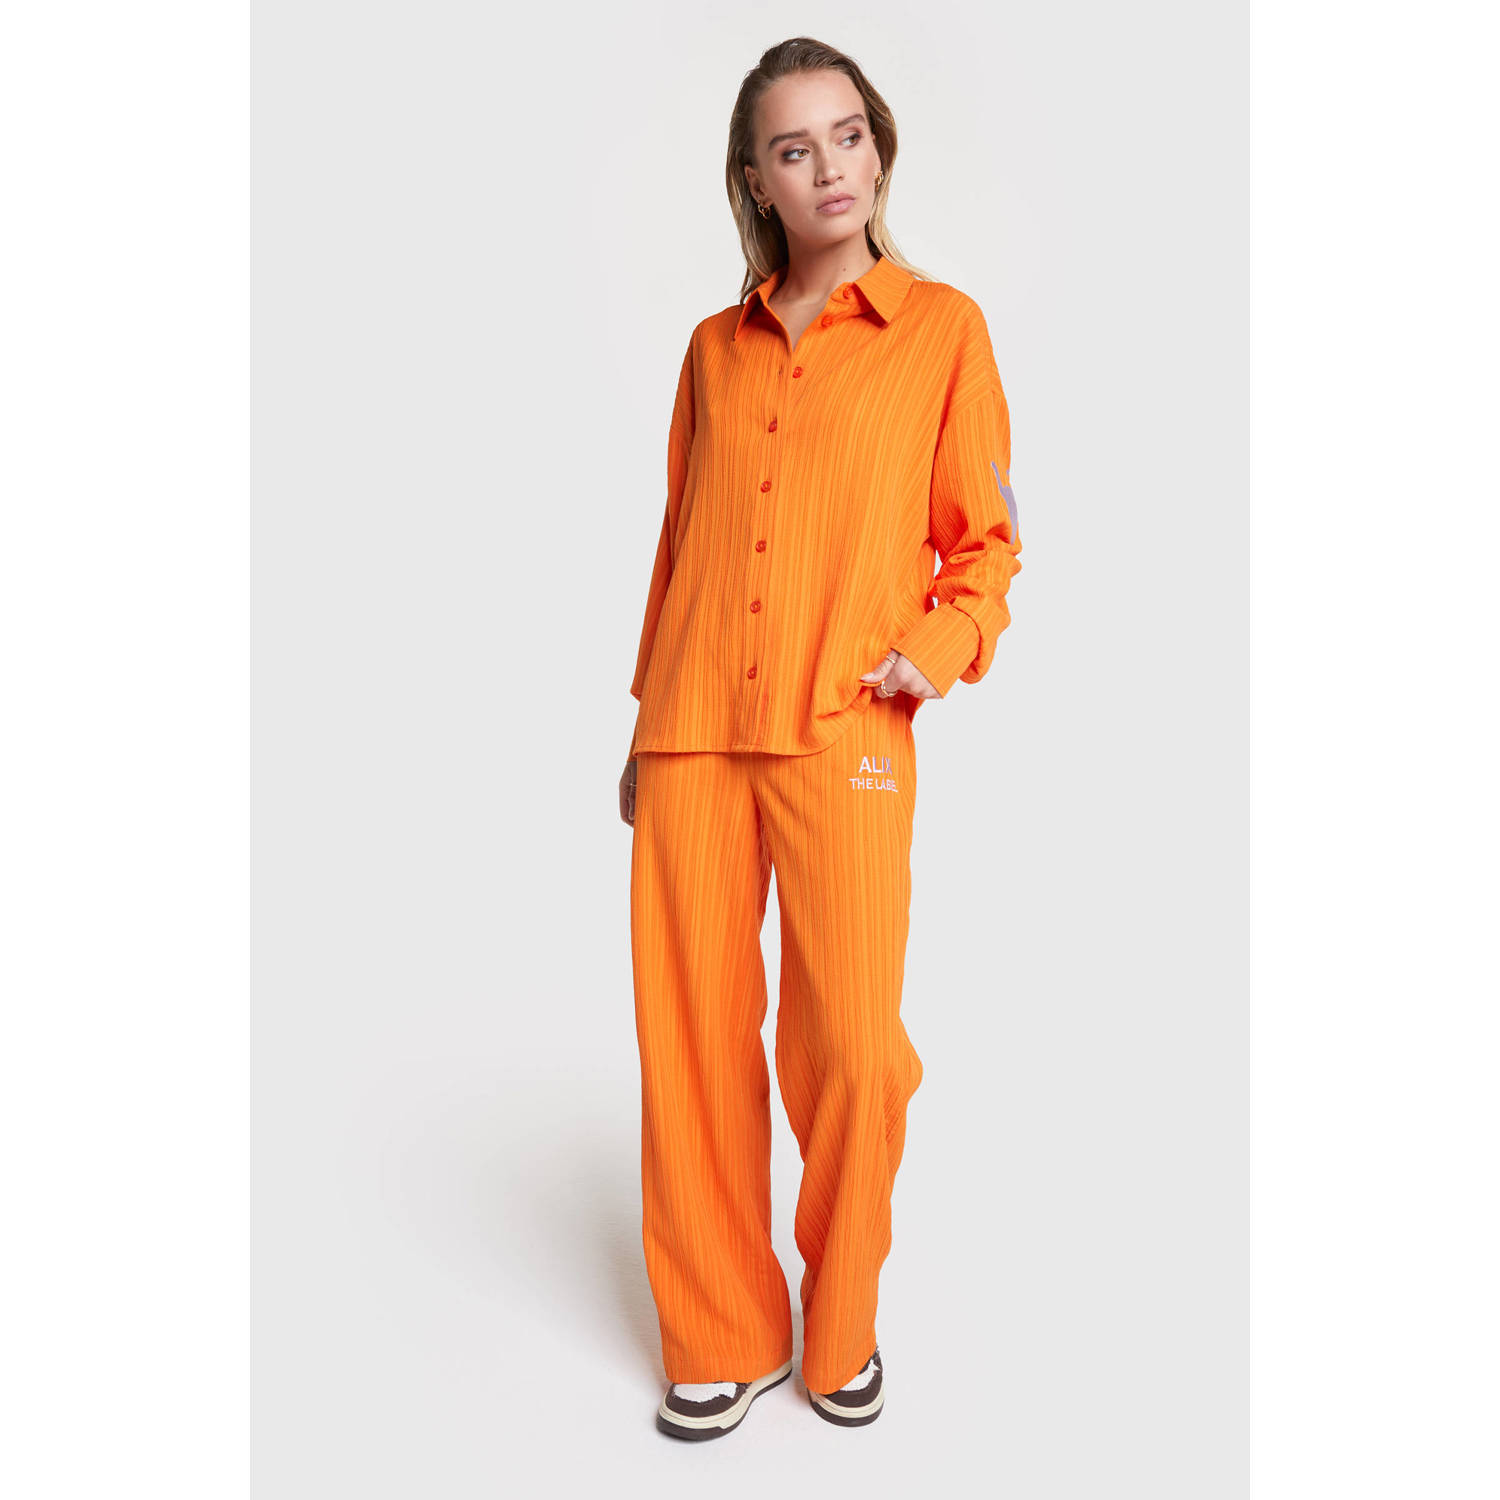 Alix the Label high waist loose fit pantalon oranje